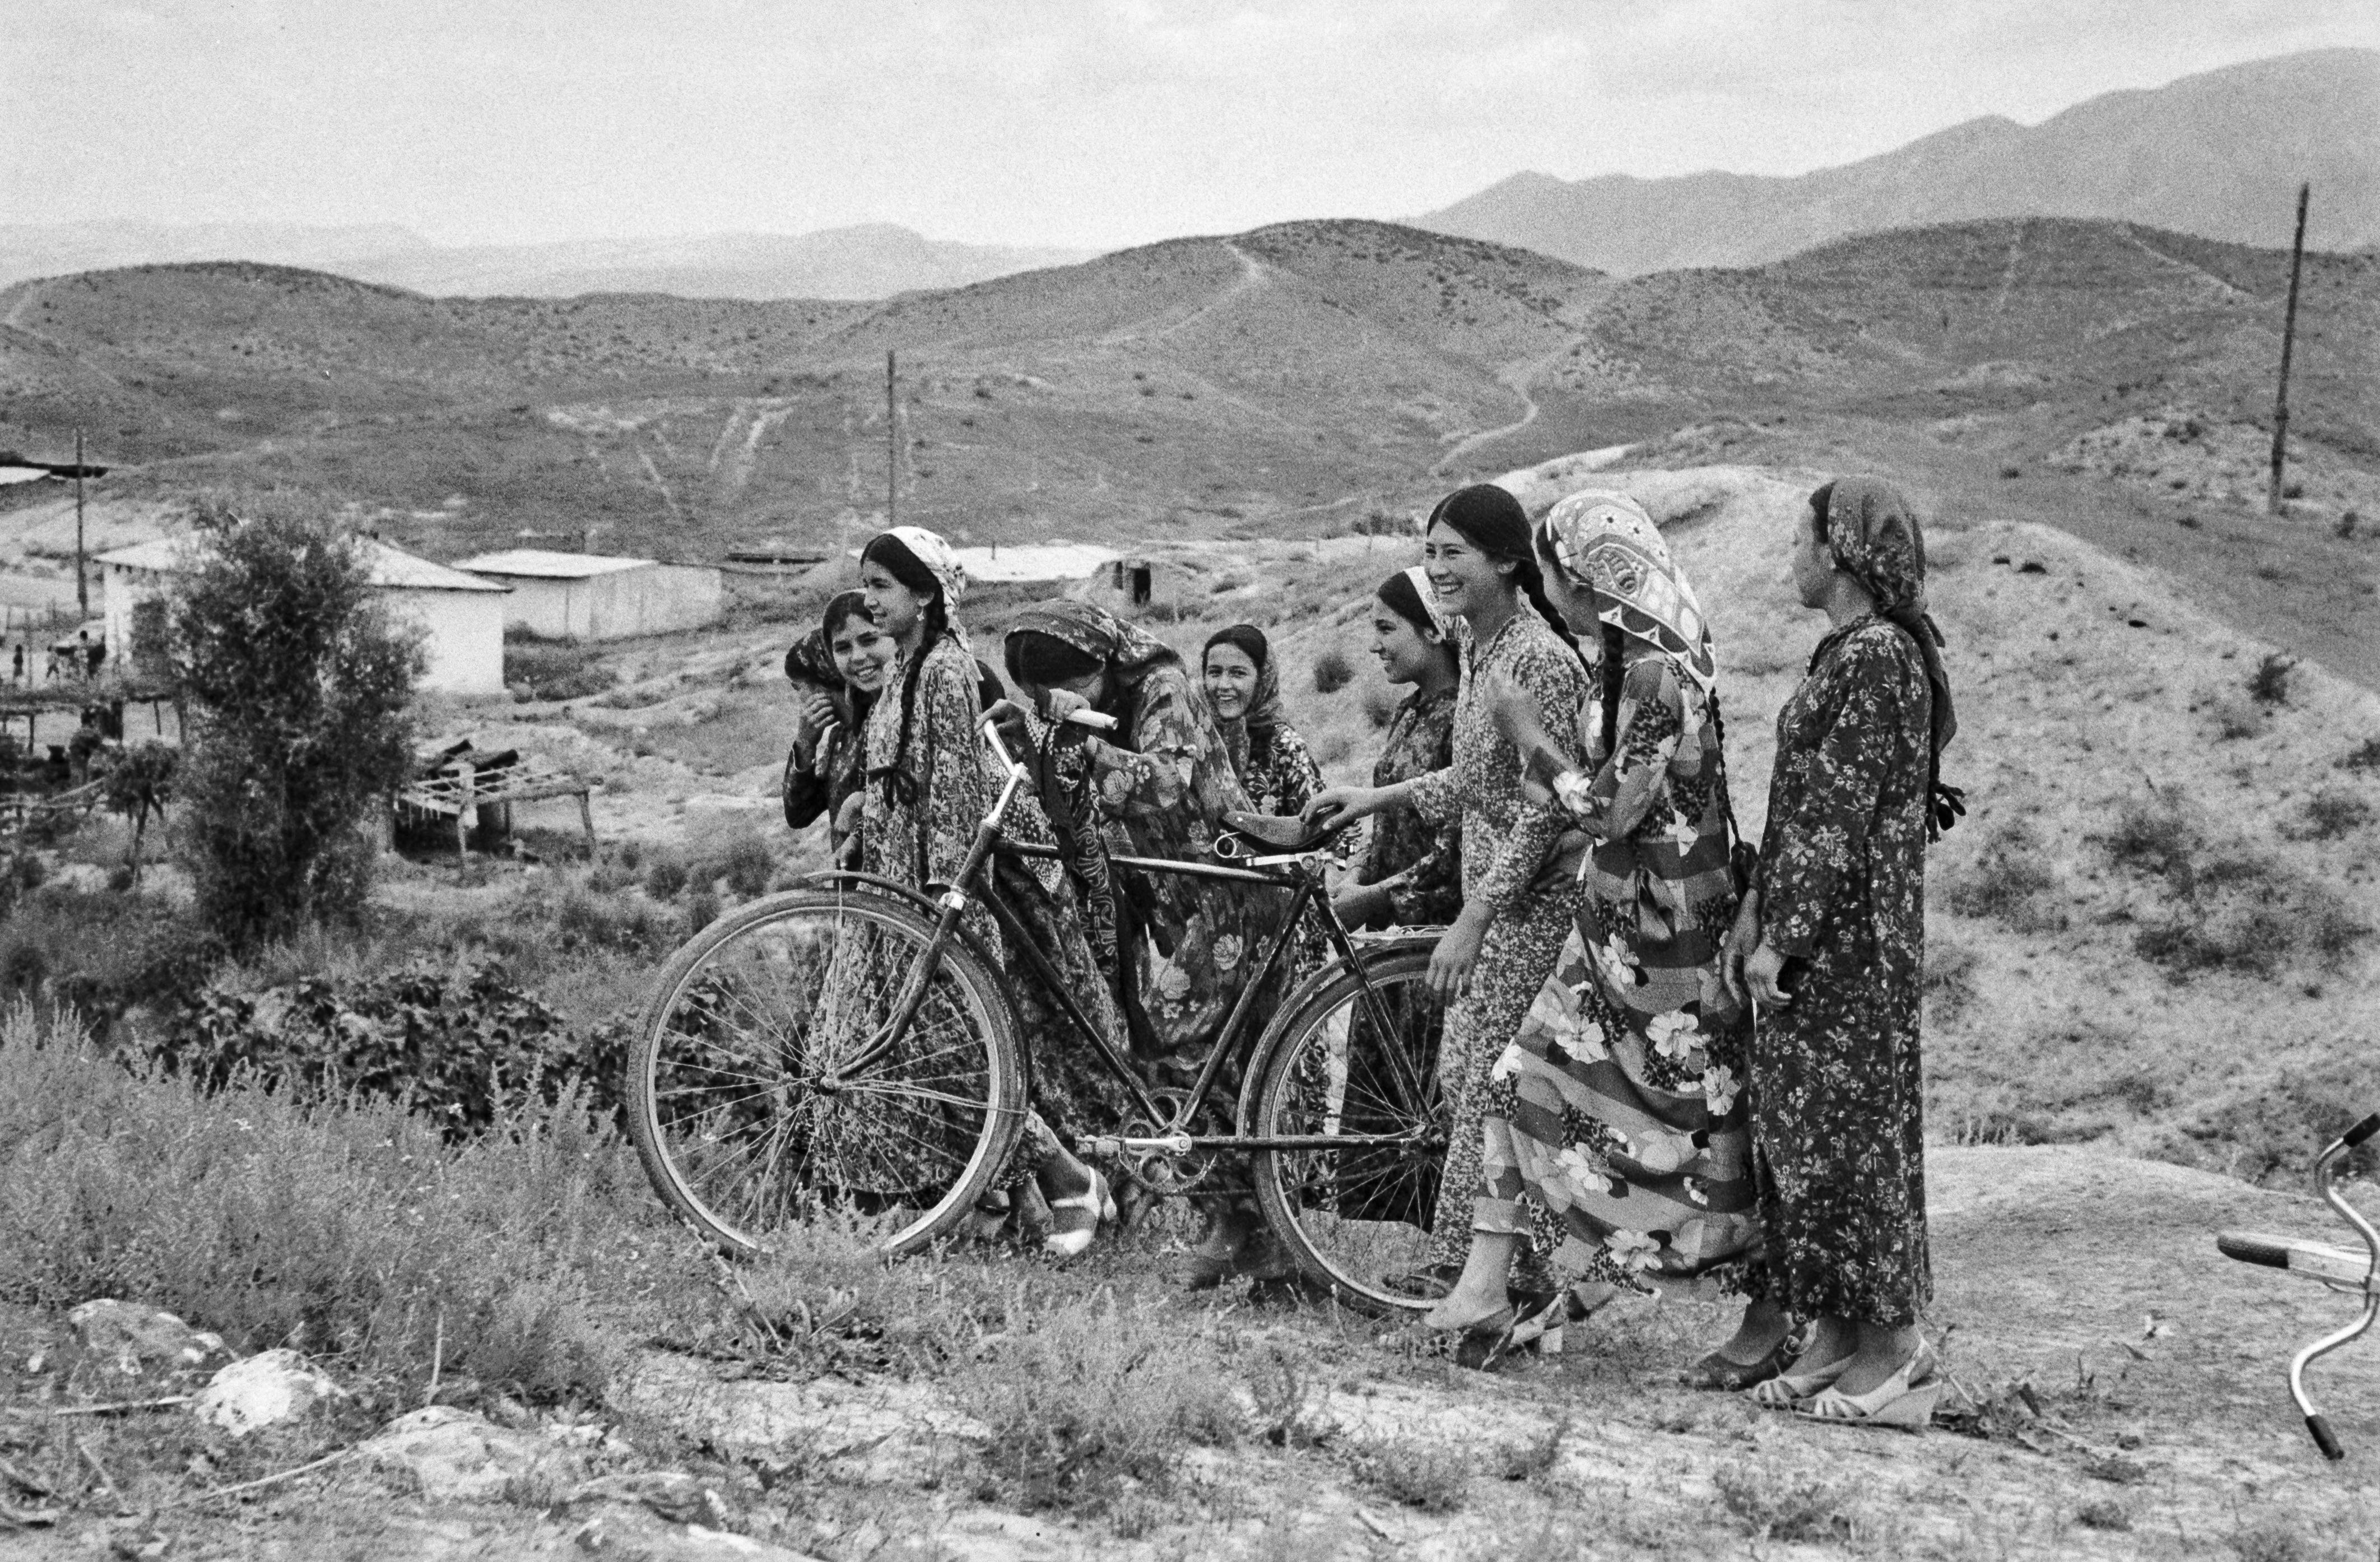 Women with bikes, wearing long dresses (<span style="font-style: italic;">koynek</span>) and head scarves (<span style="font-style: italic;">yaglyk</span>).